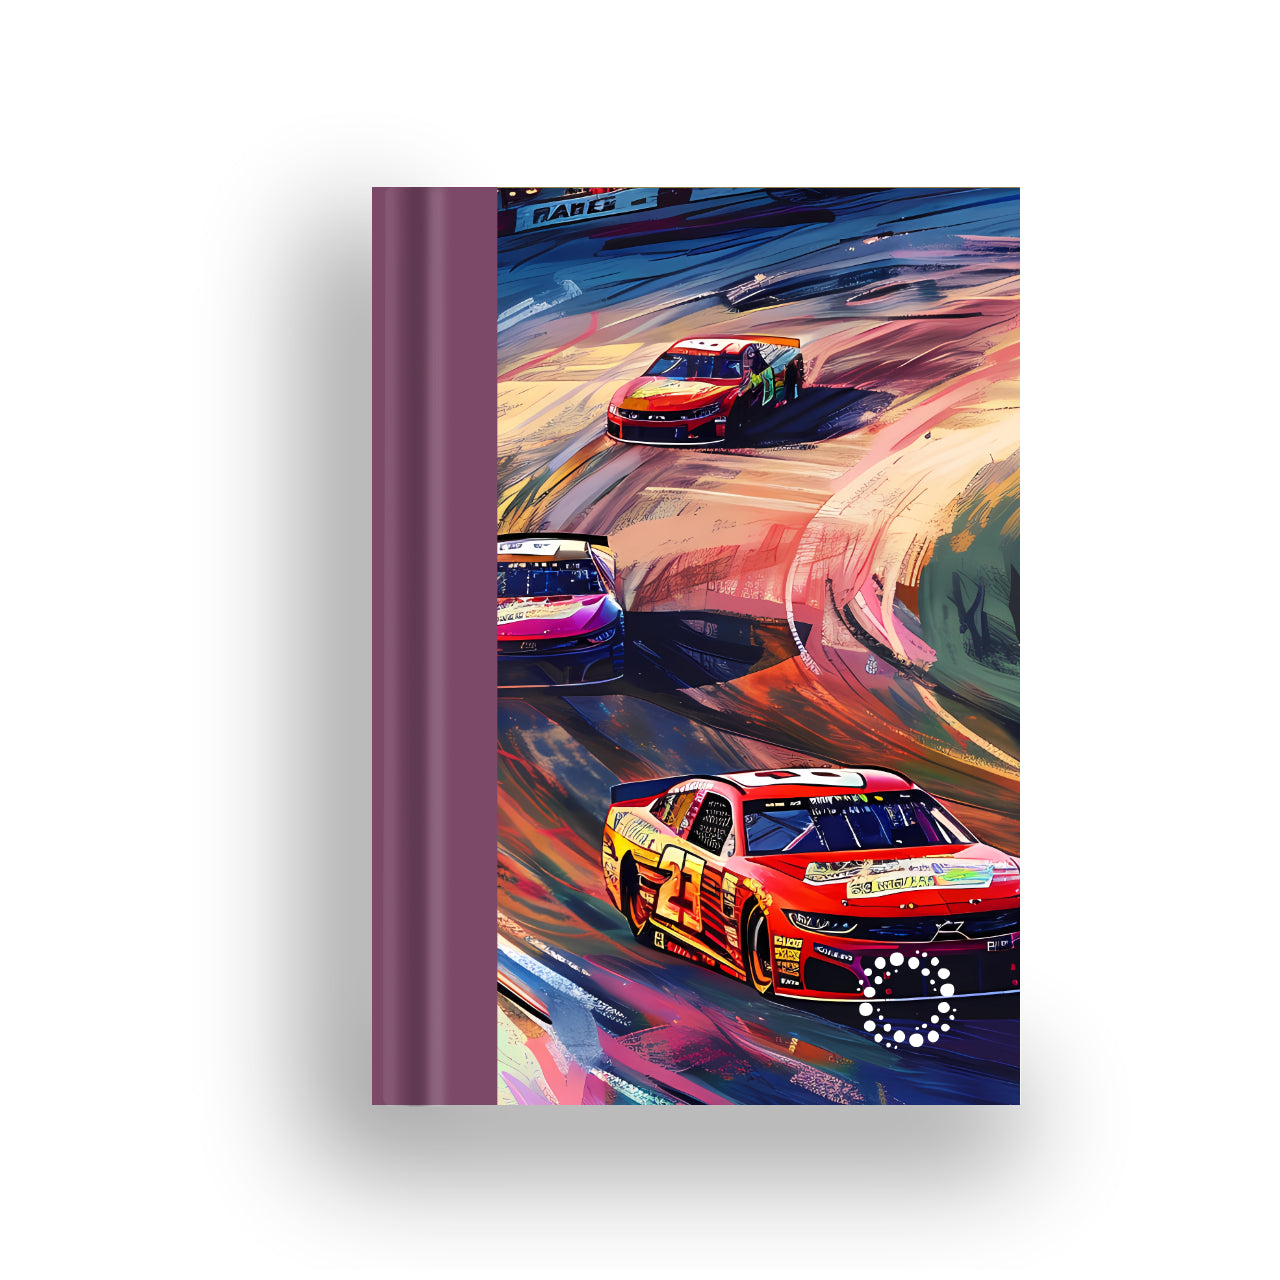 Speedway - A5 Hardback Notebook